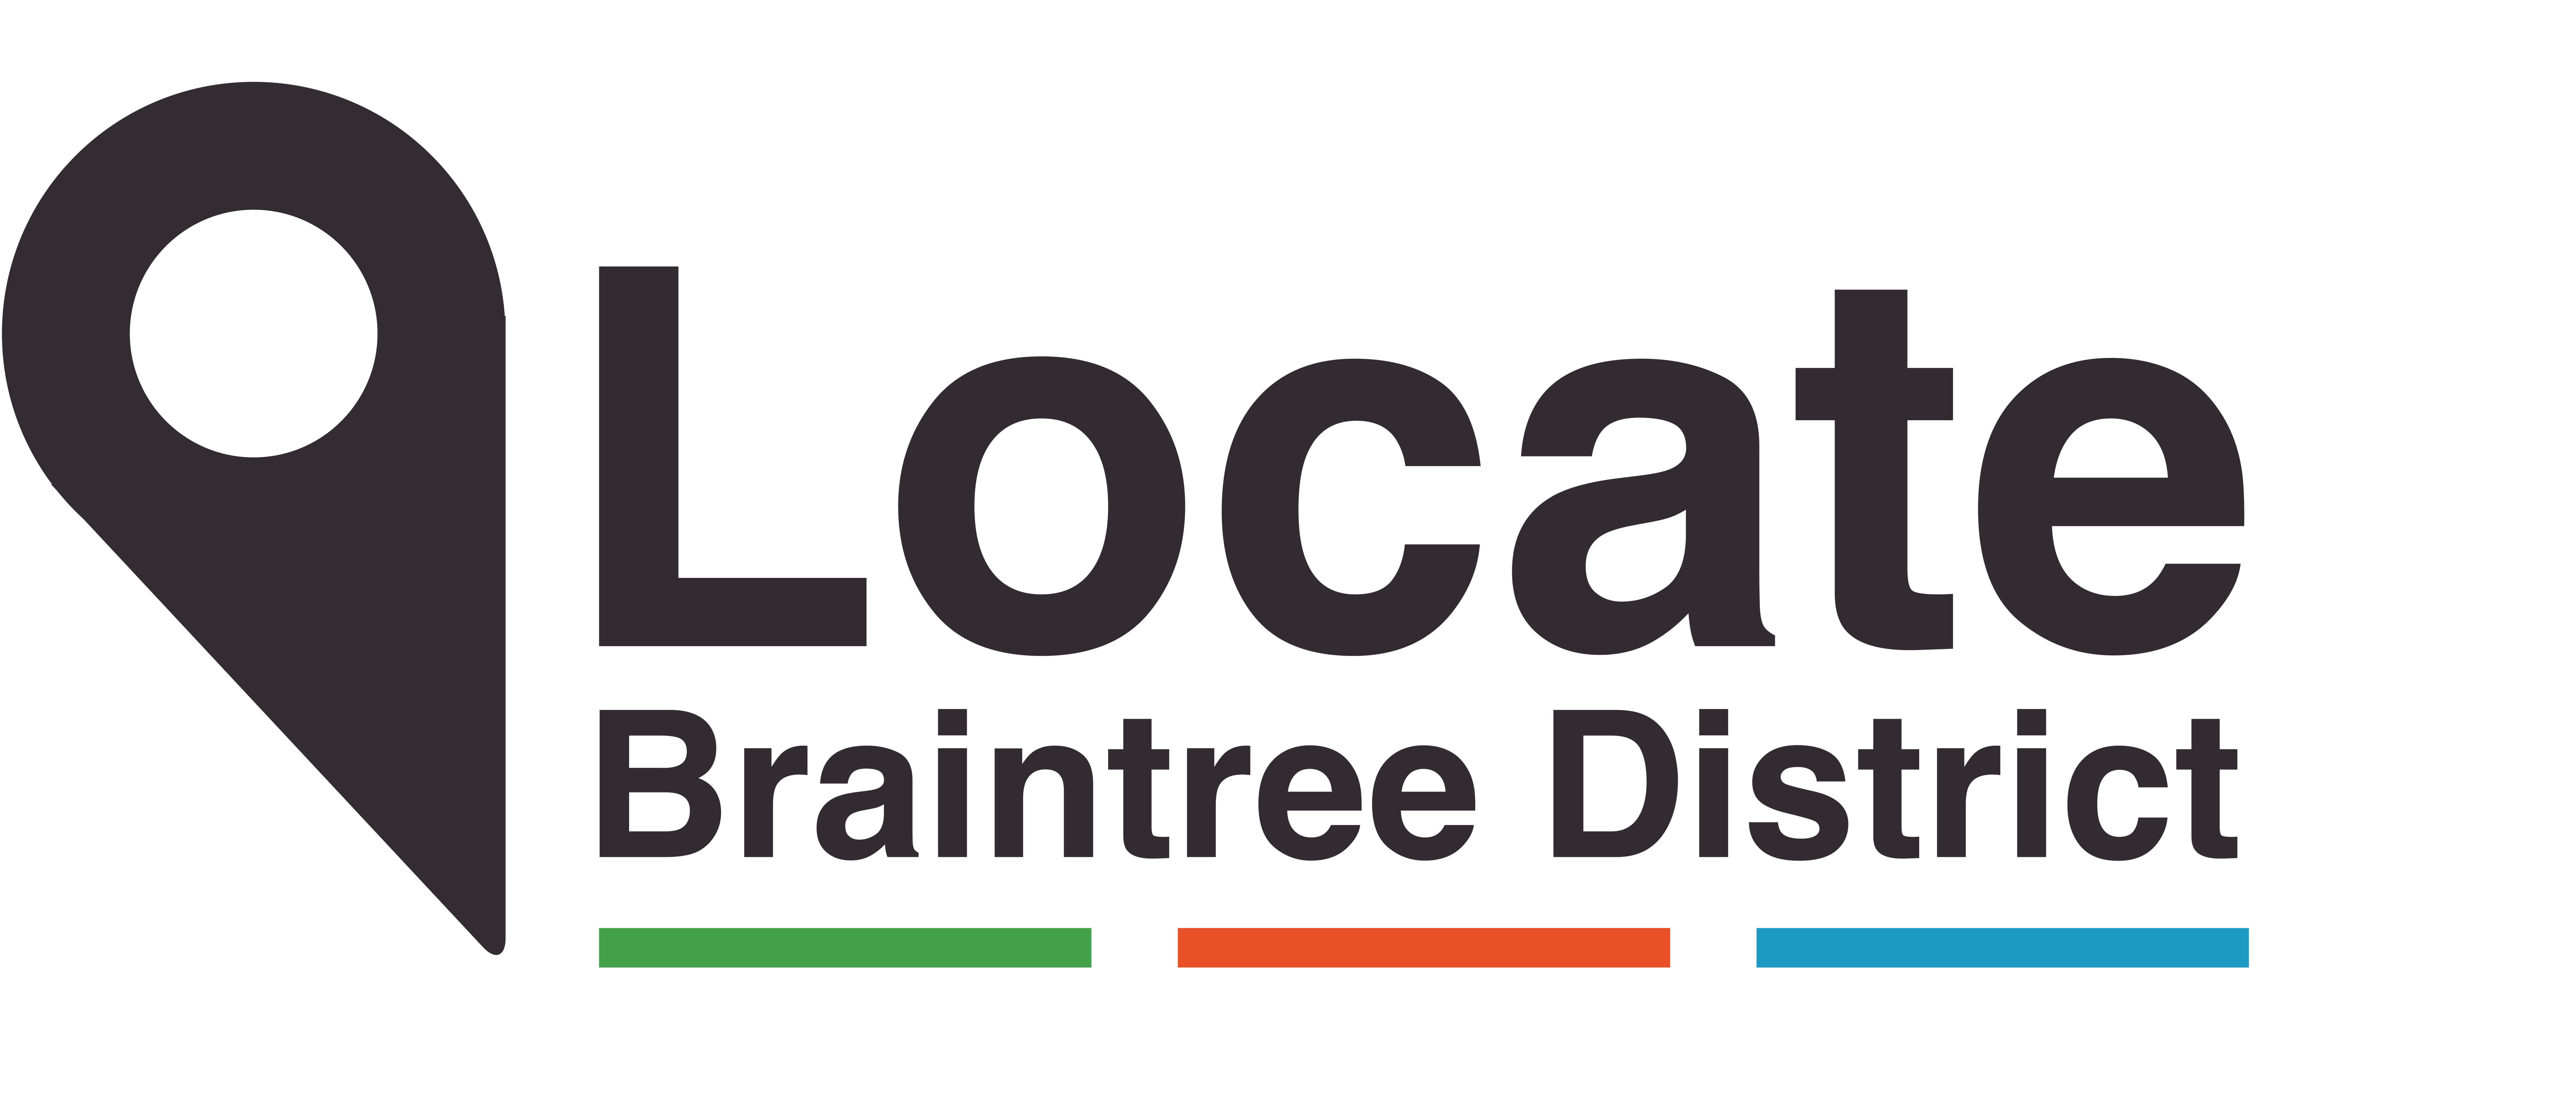 Locate Braintree District